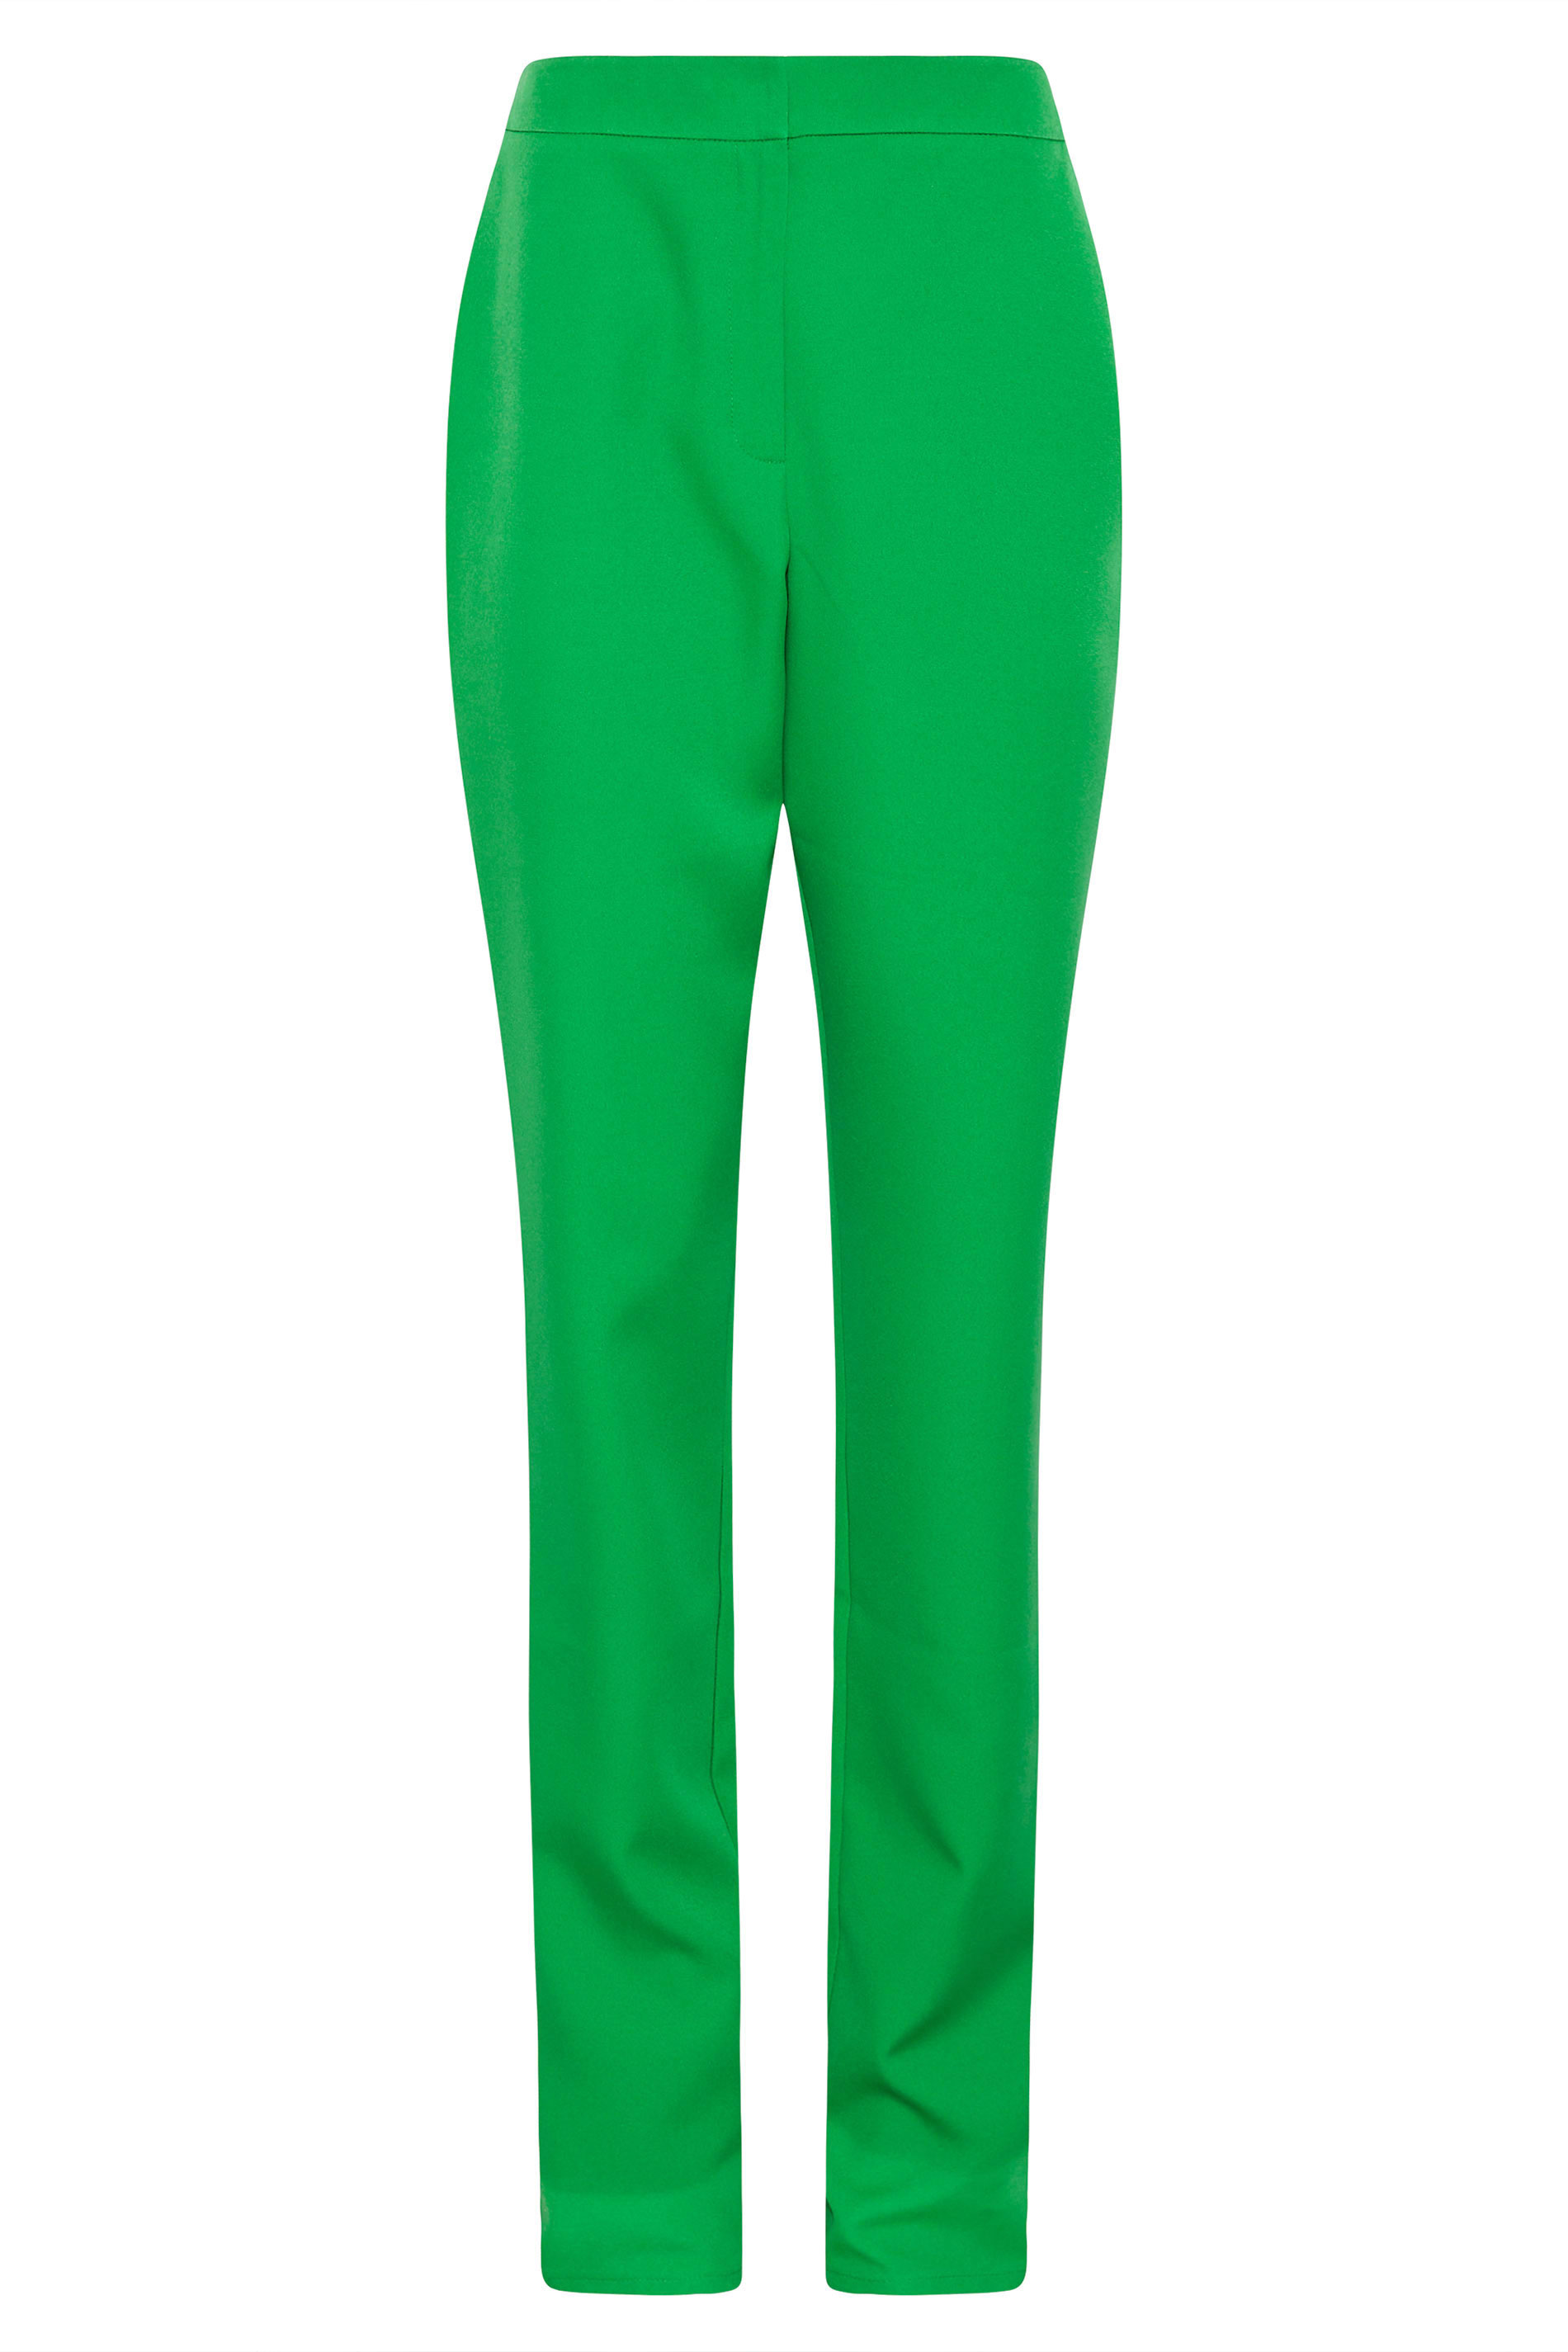 LTS Tall Women's Bright Green Scuba Slim Leg Trousers | Long Tall Sally 3